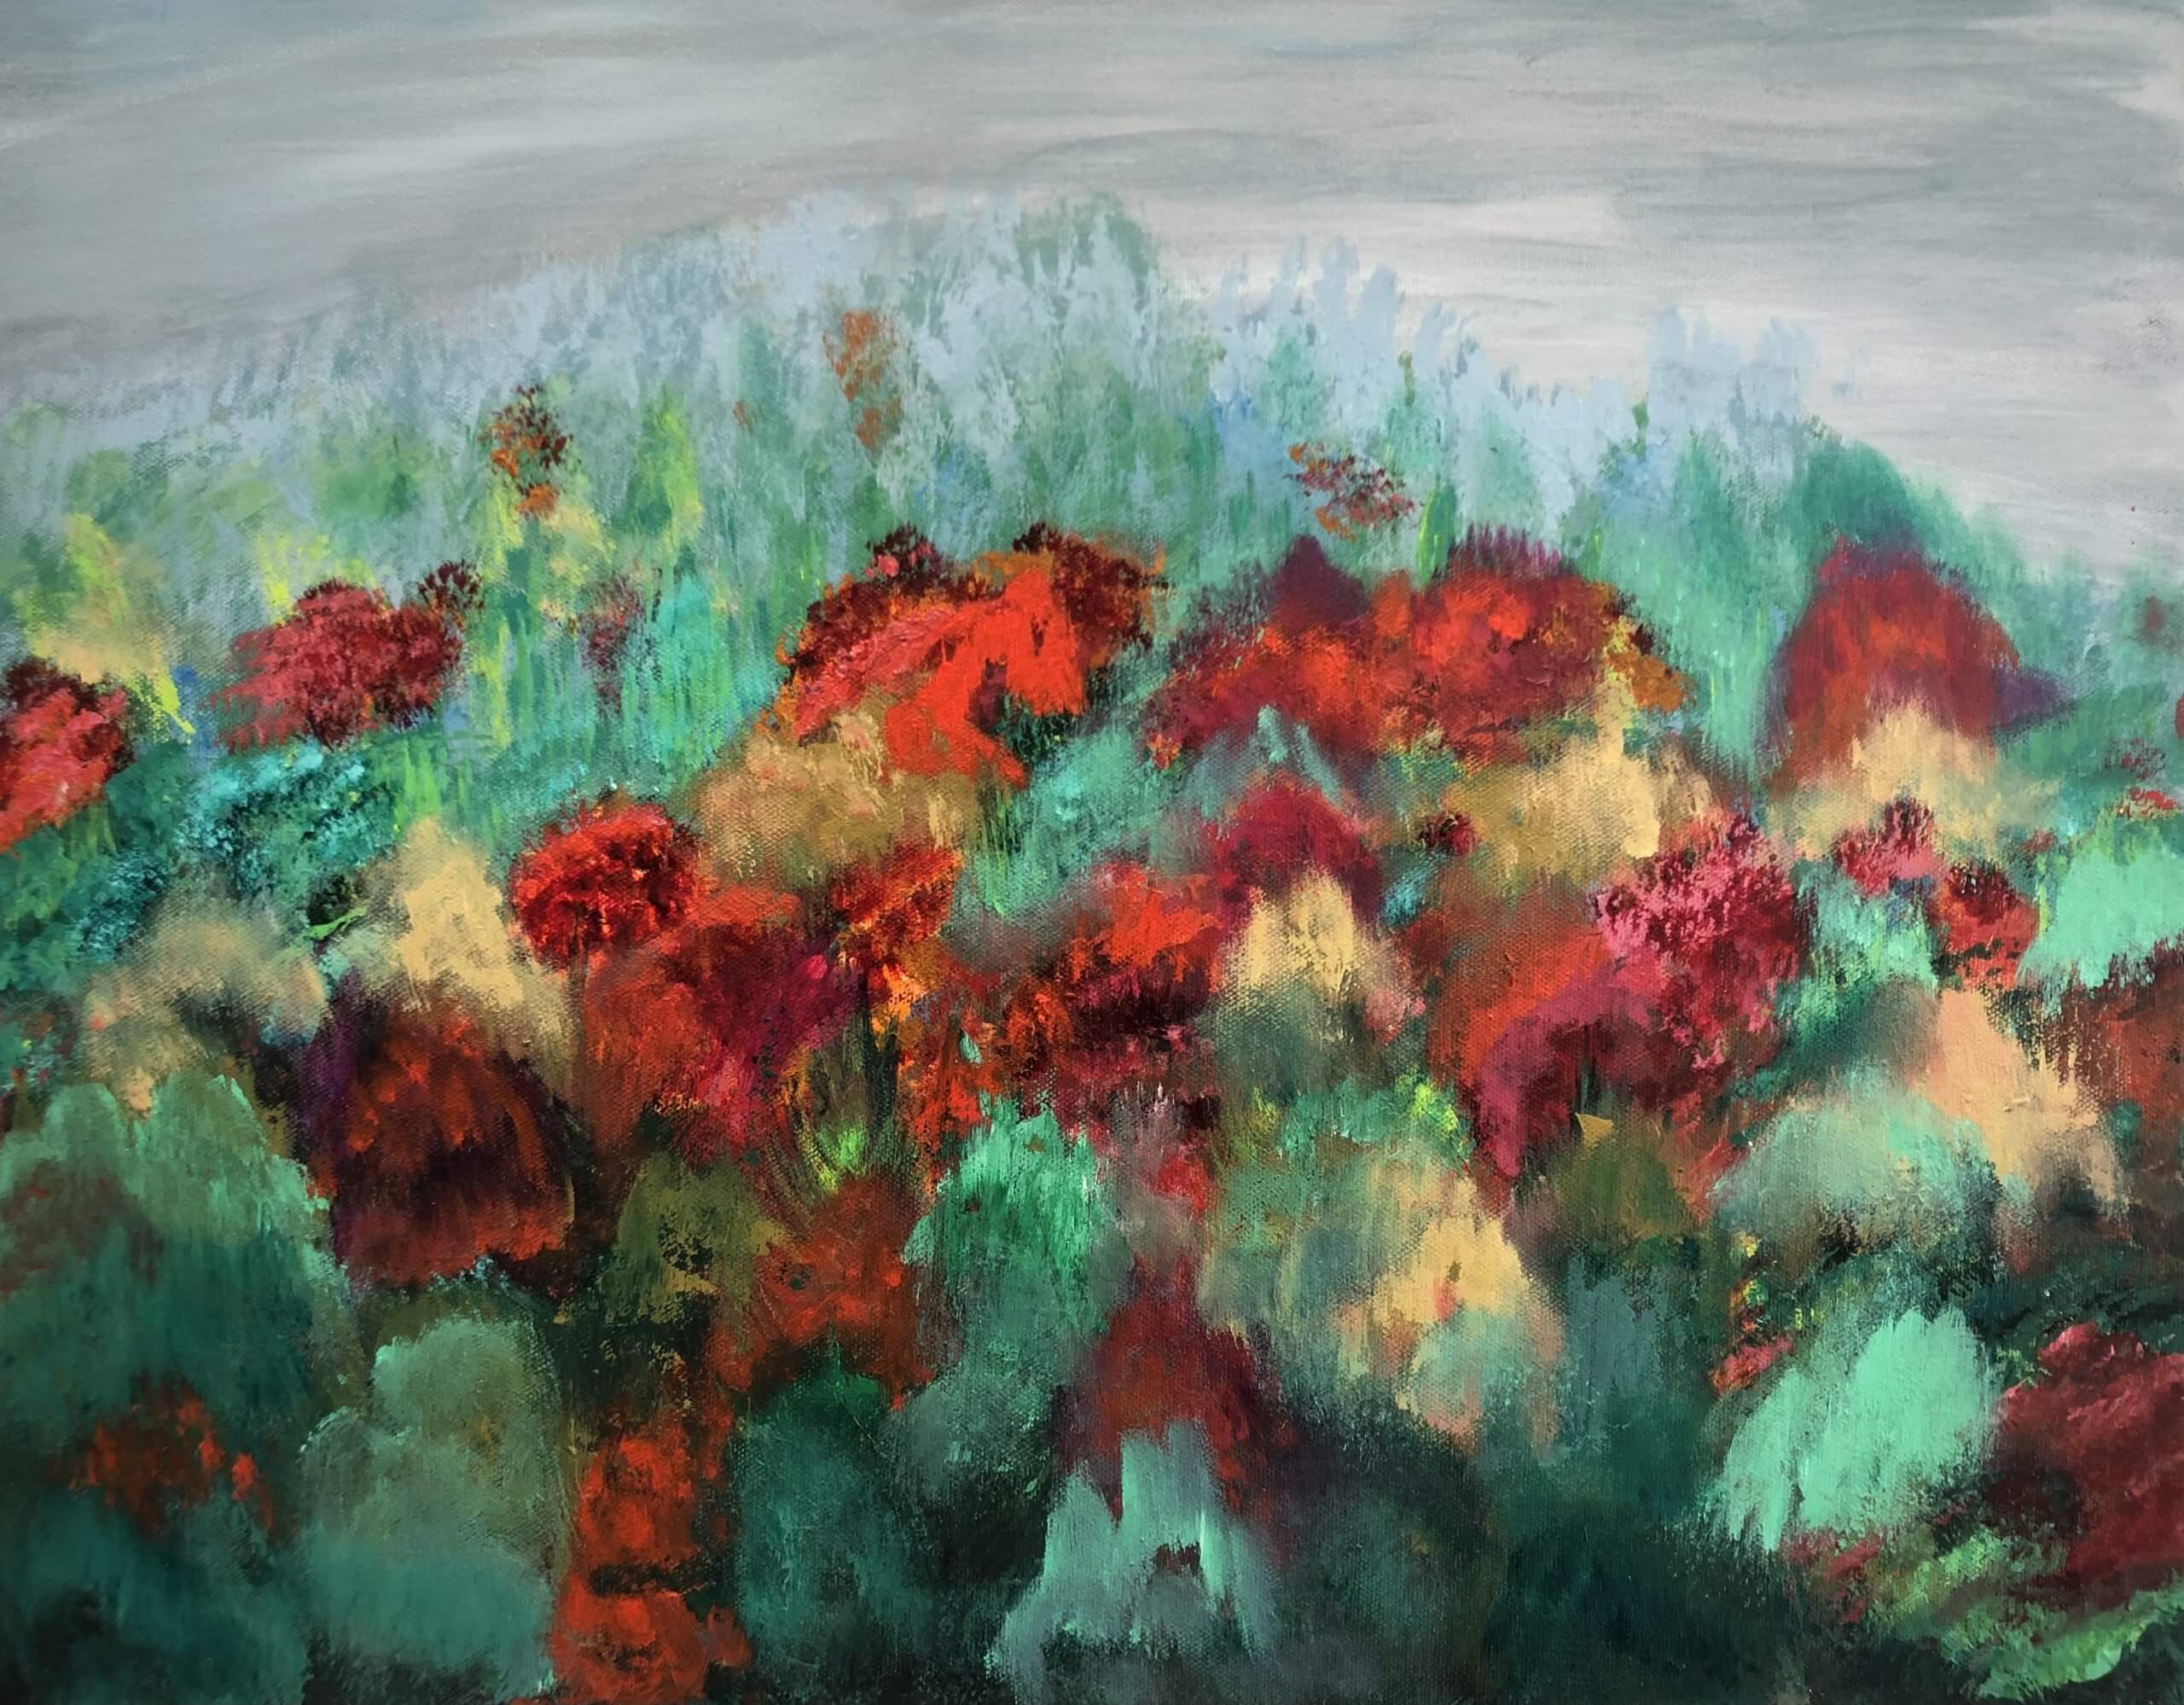 Hoda Awad, "Vermont," Acrylic On Canvas, 16" x 20"